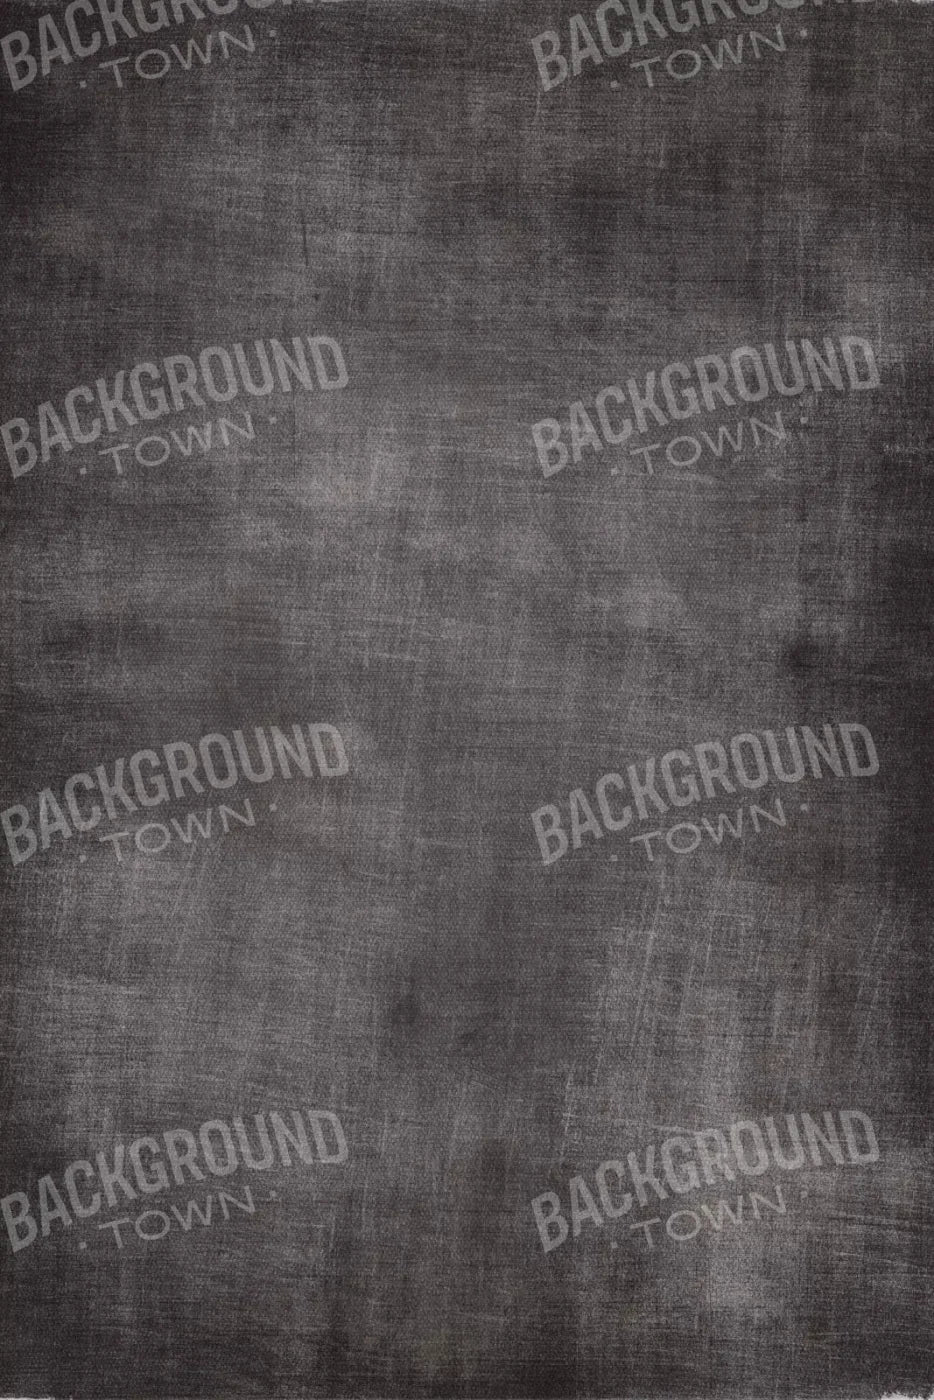 Blackboard 5X8 Ultracloth ( 60 X 96 Inch ) Backdrop